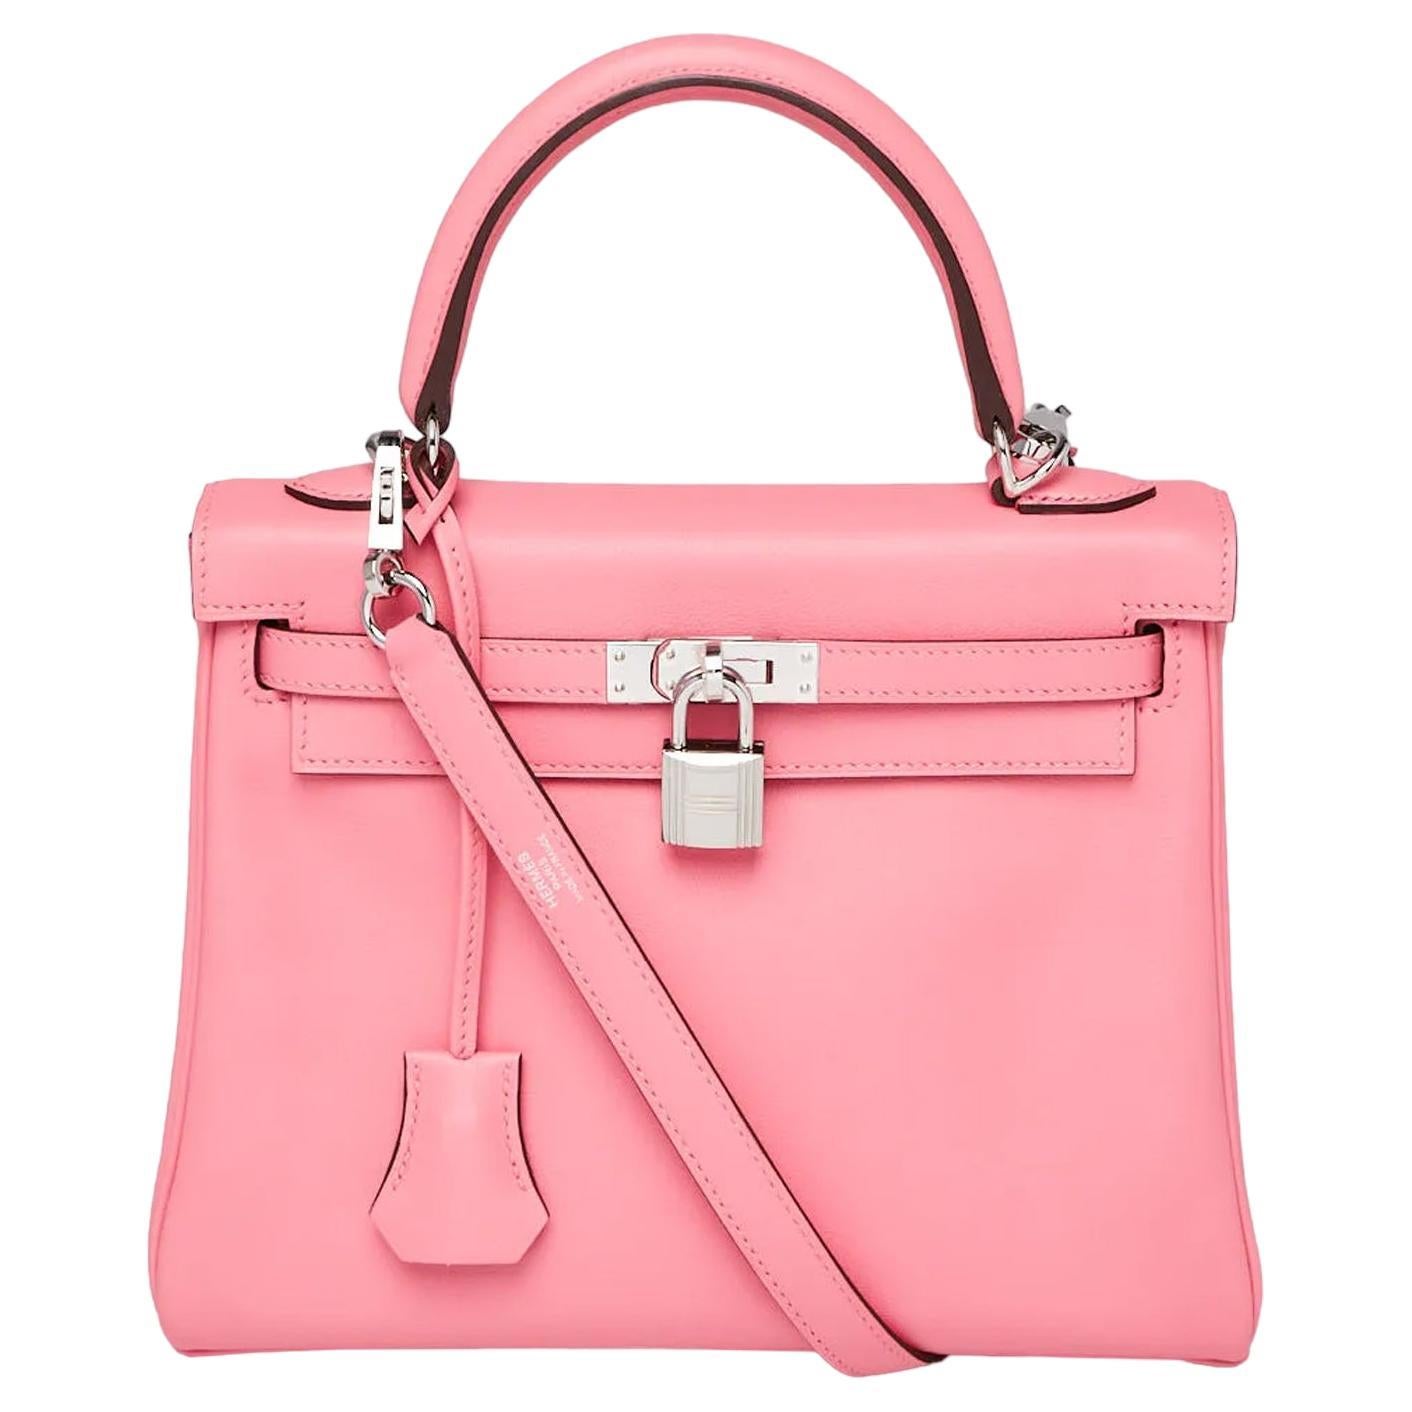 Hermes 25cm Bubblegum Pink Swift Leather Palladium Plated Kelly Retourne Bag For Sale